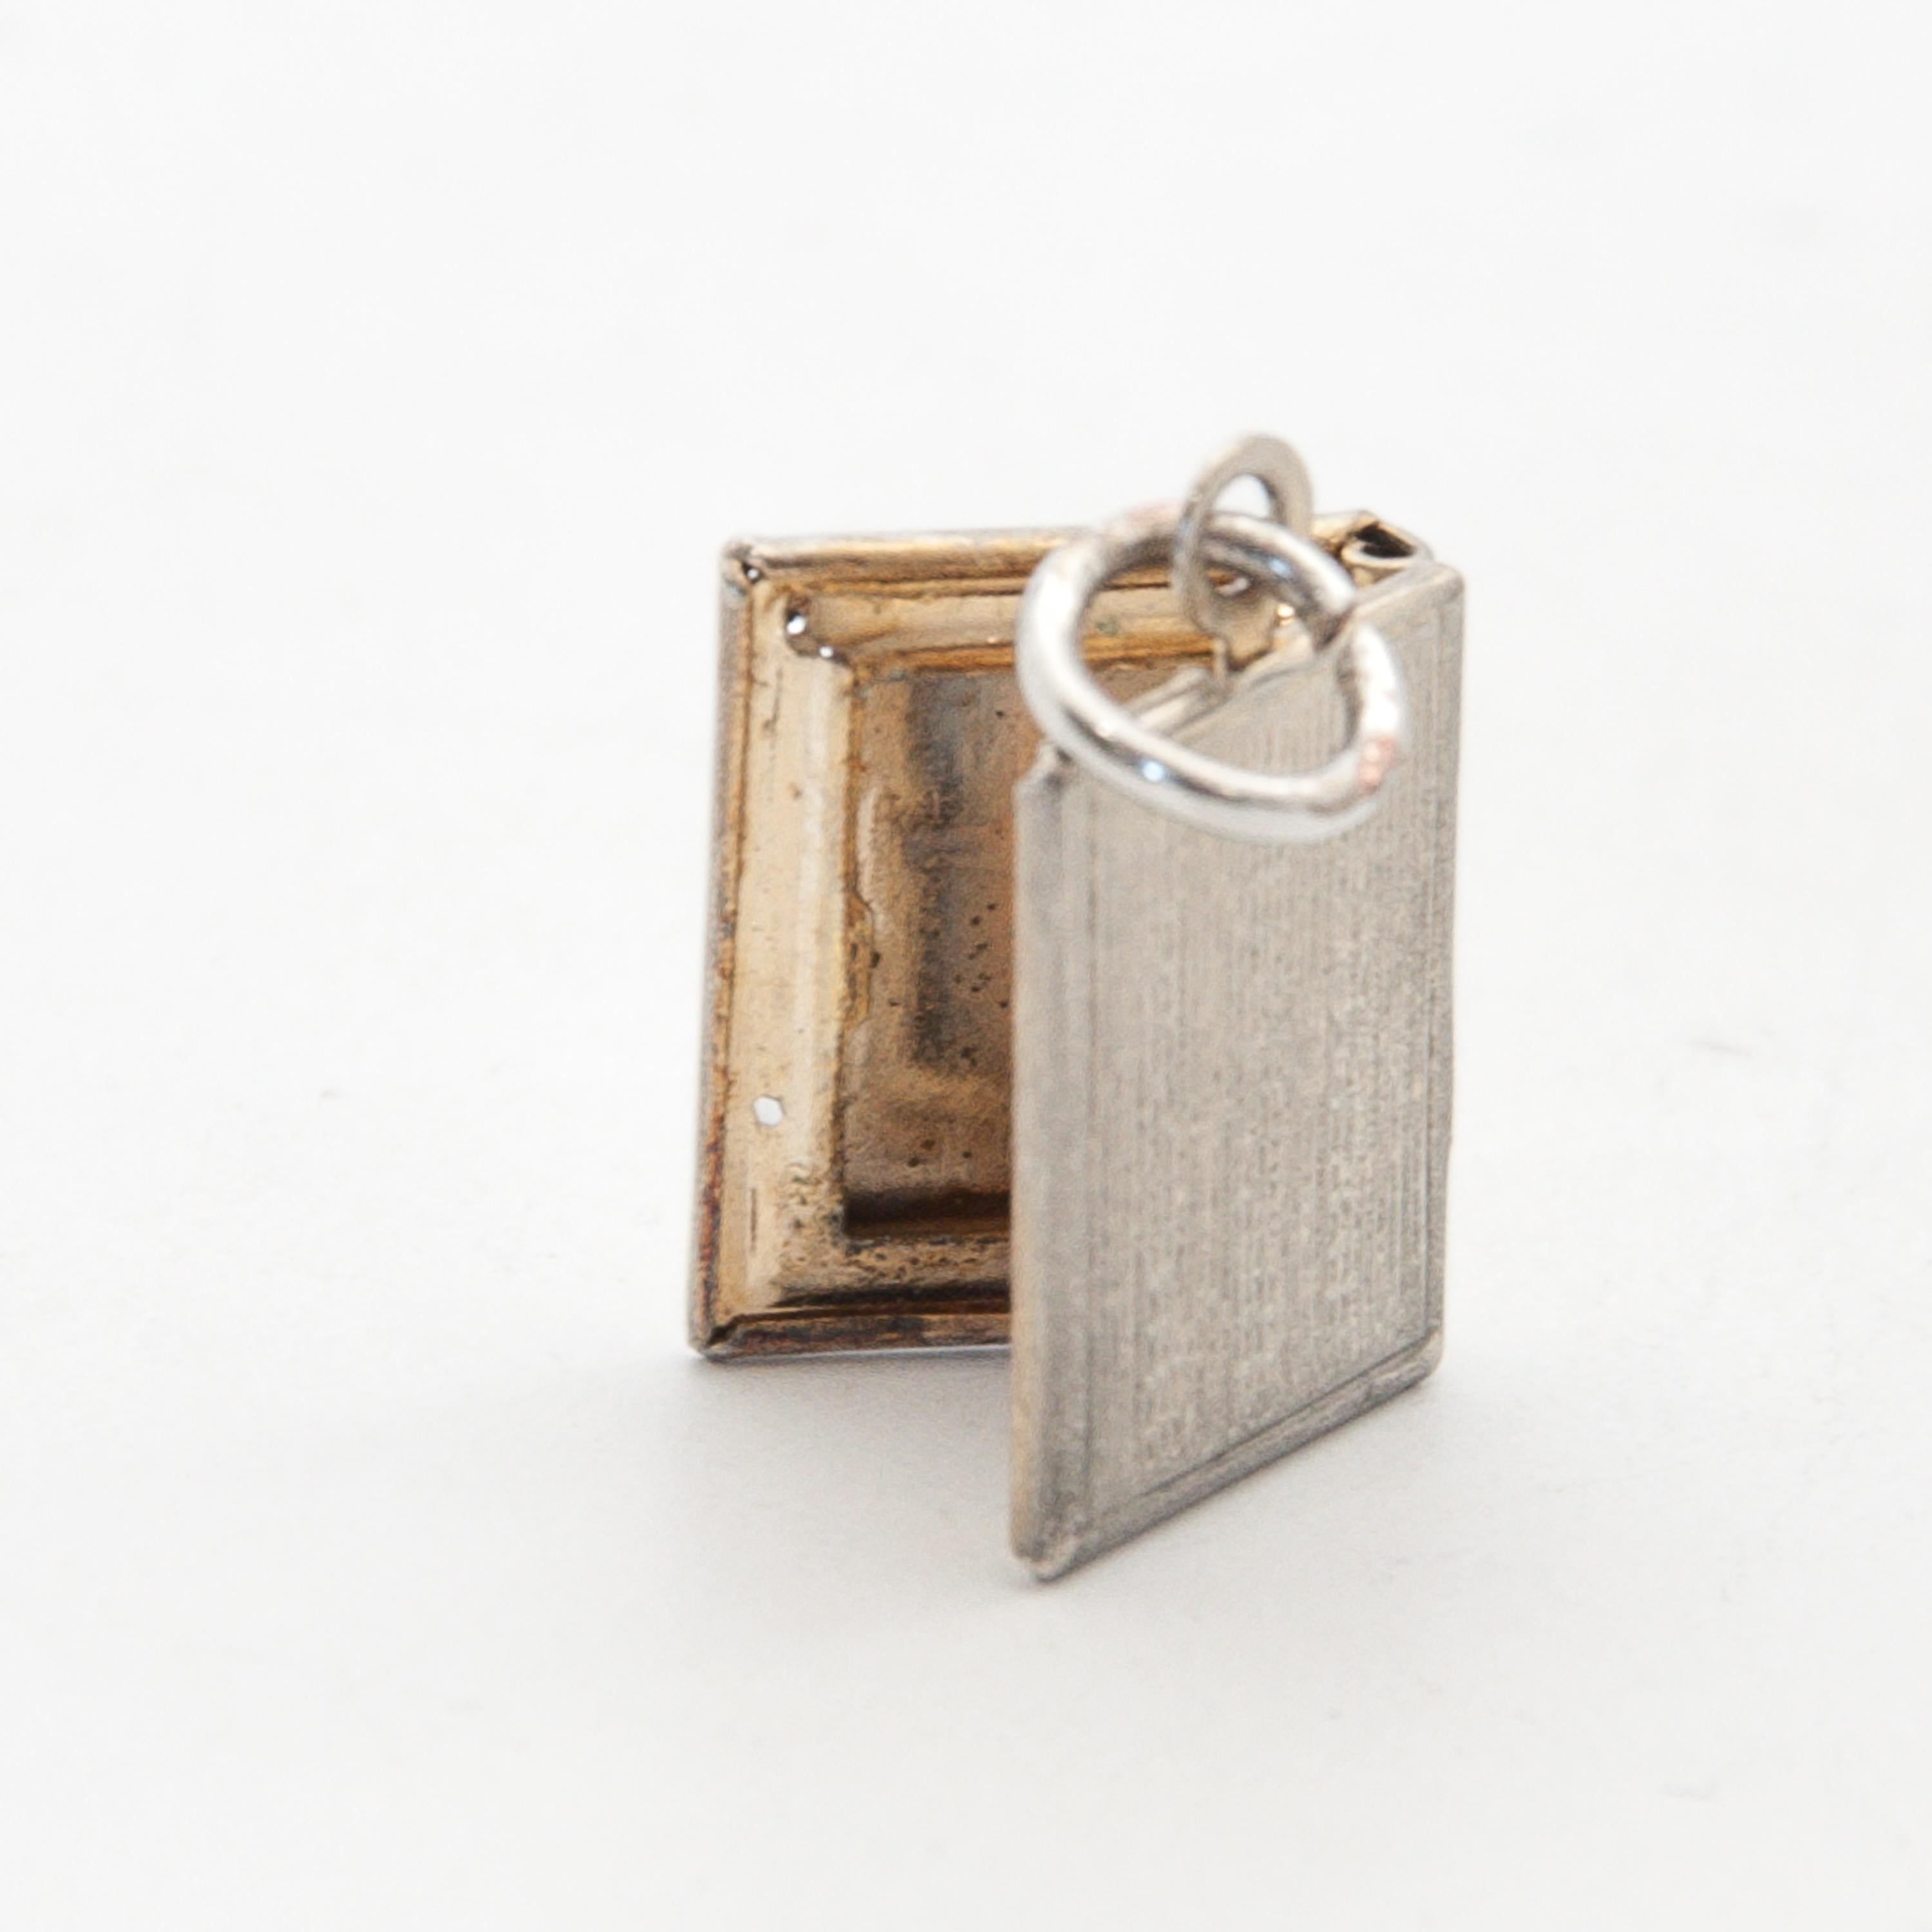 Vintage Religious Miniature Book Locket Charm Pendant 1